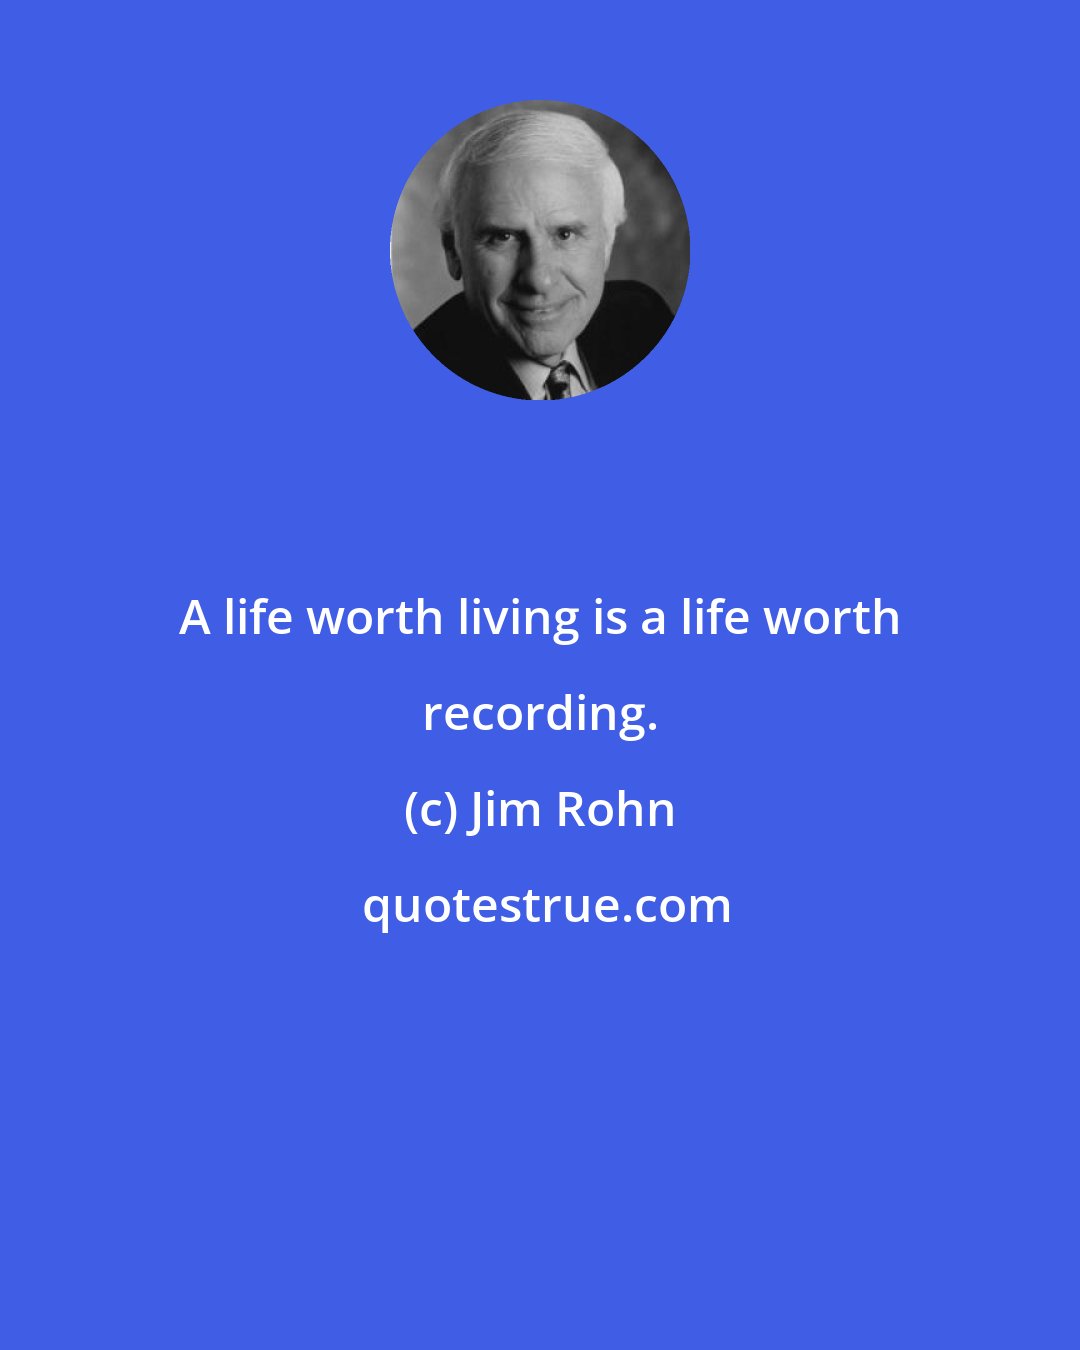 Jim Rohn: A life worth living is a life worth recording.